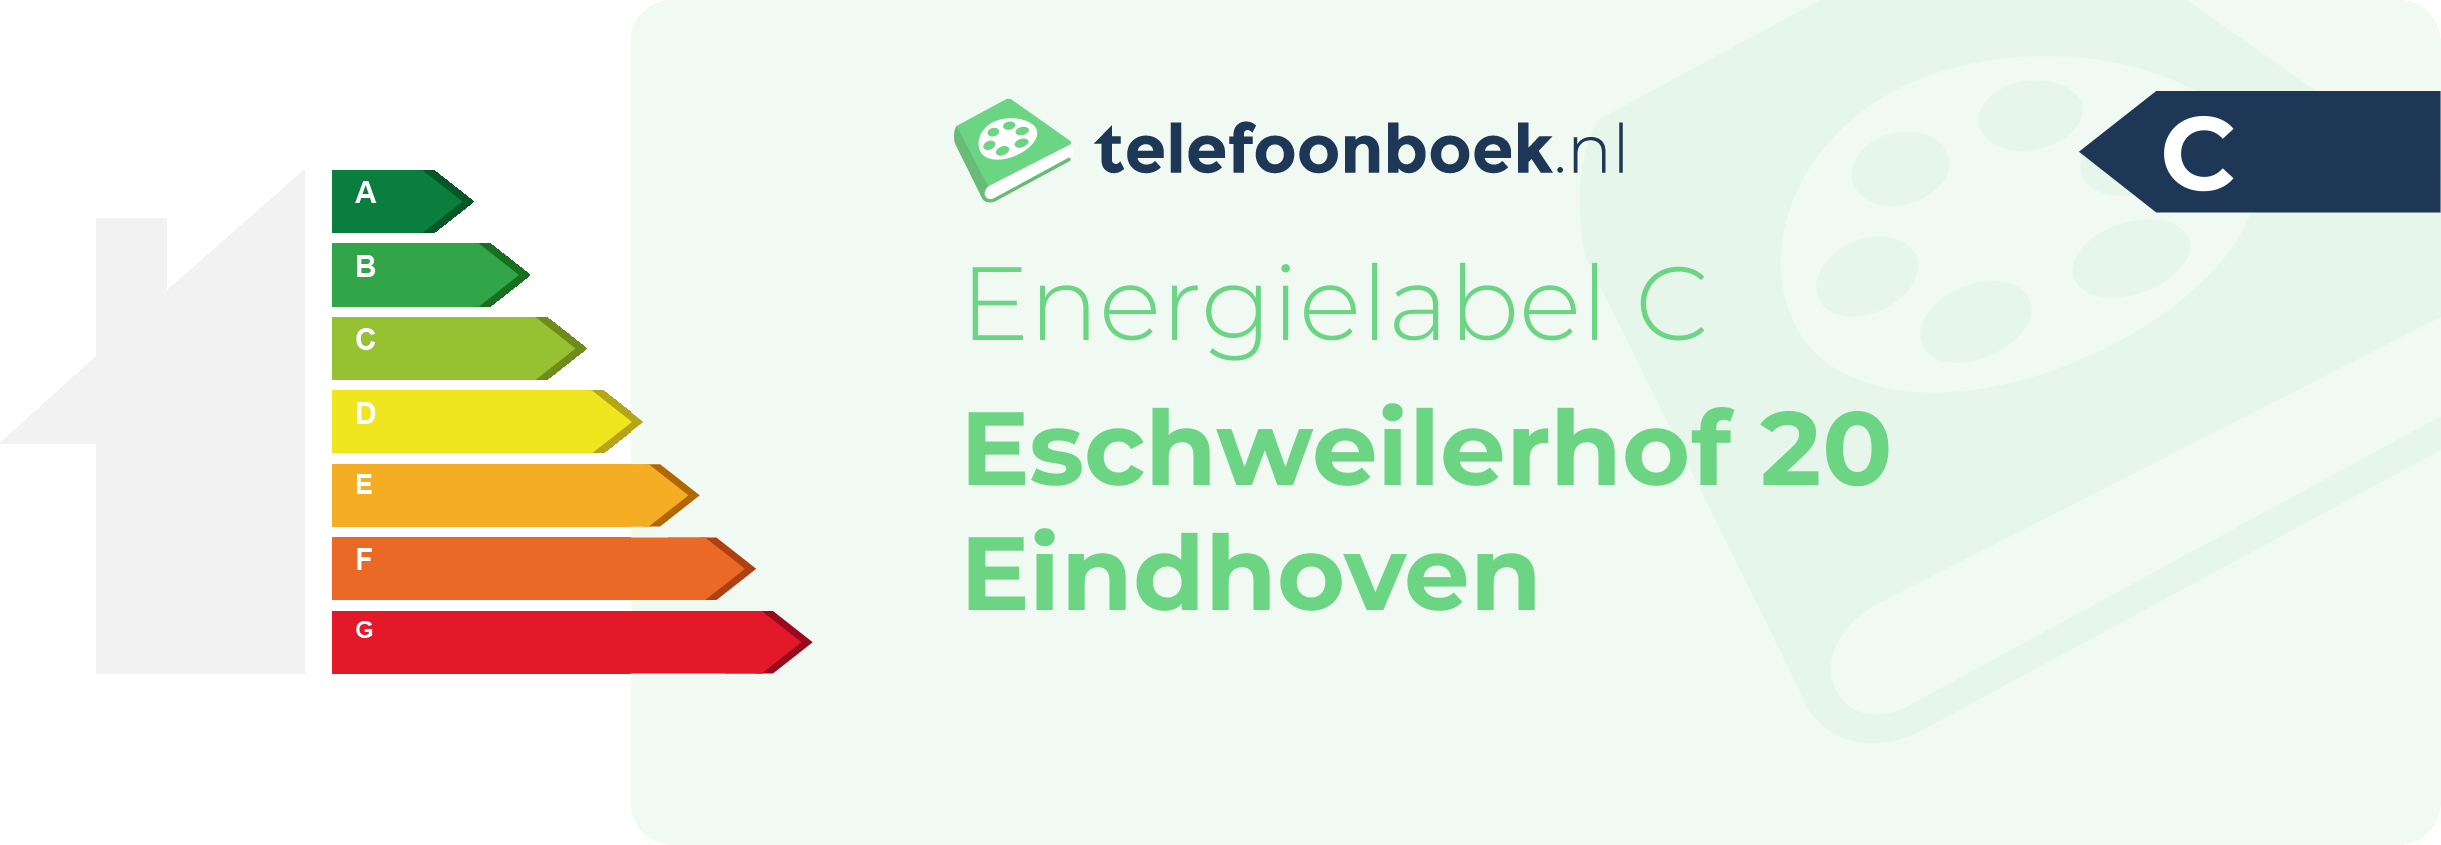 Energielabel Eschweilerhof 20 Eindhoven